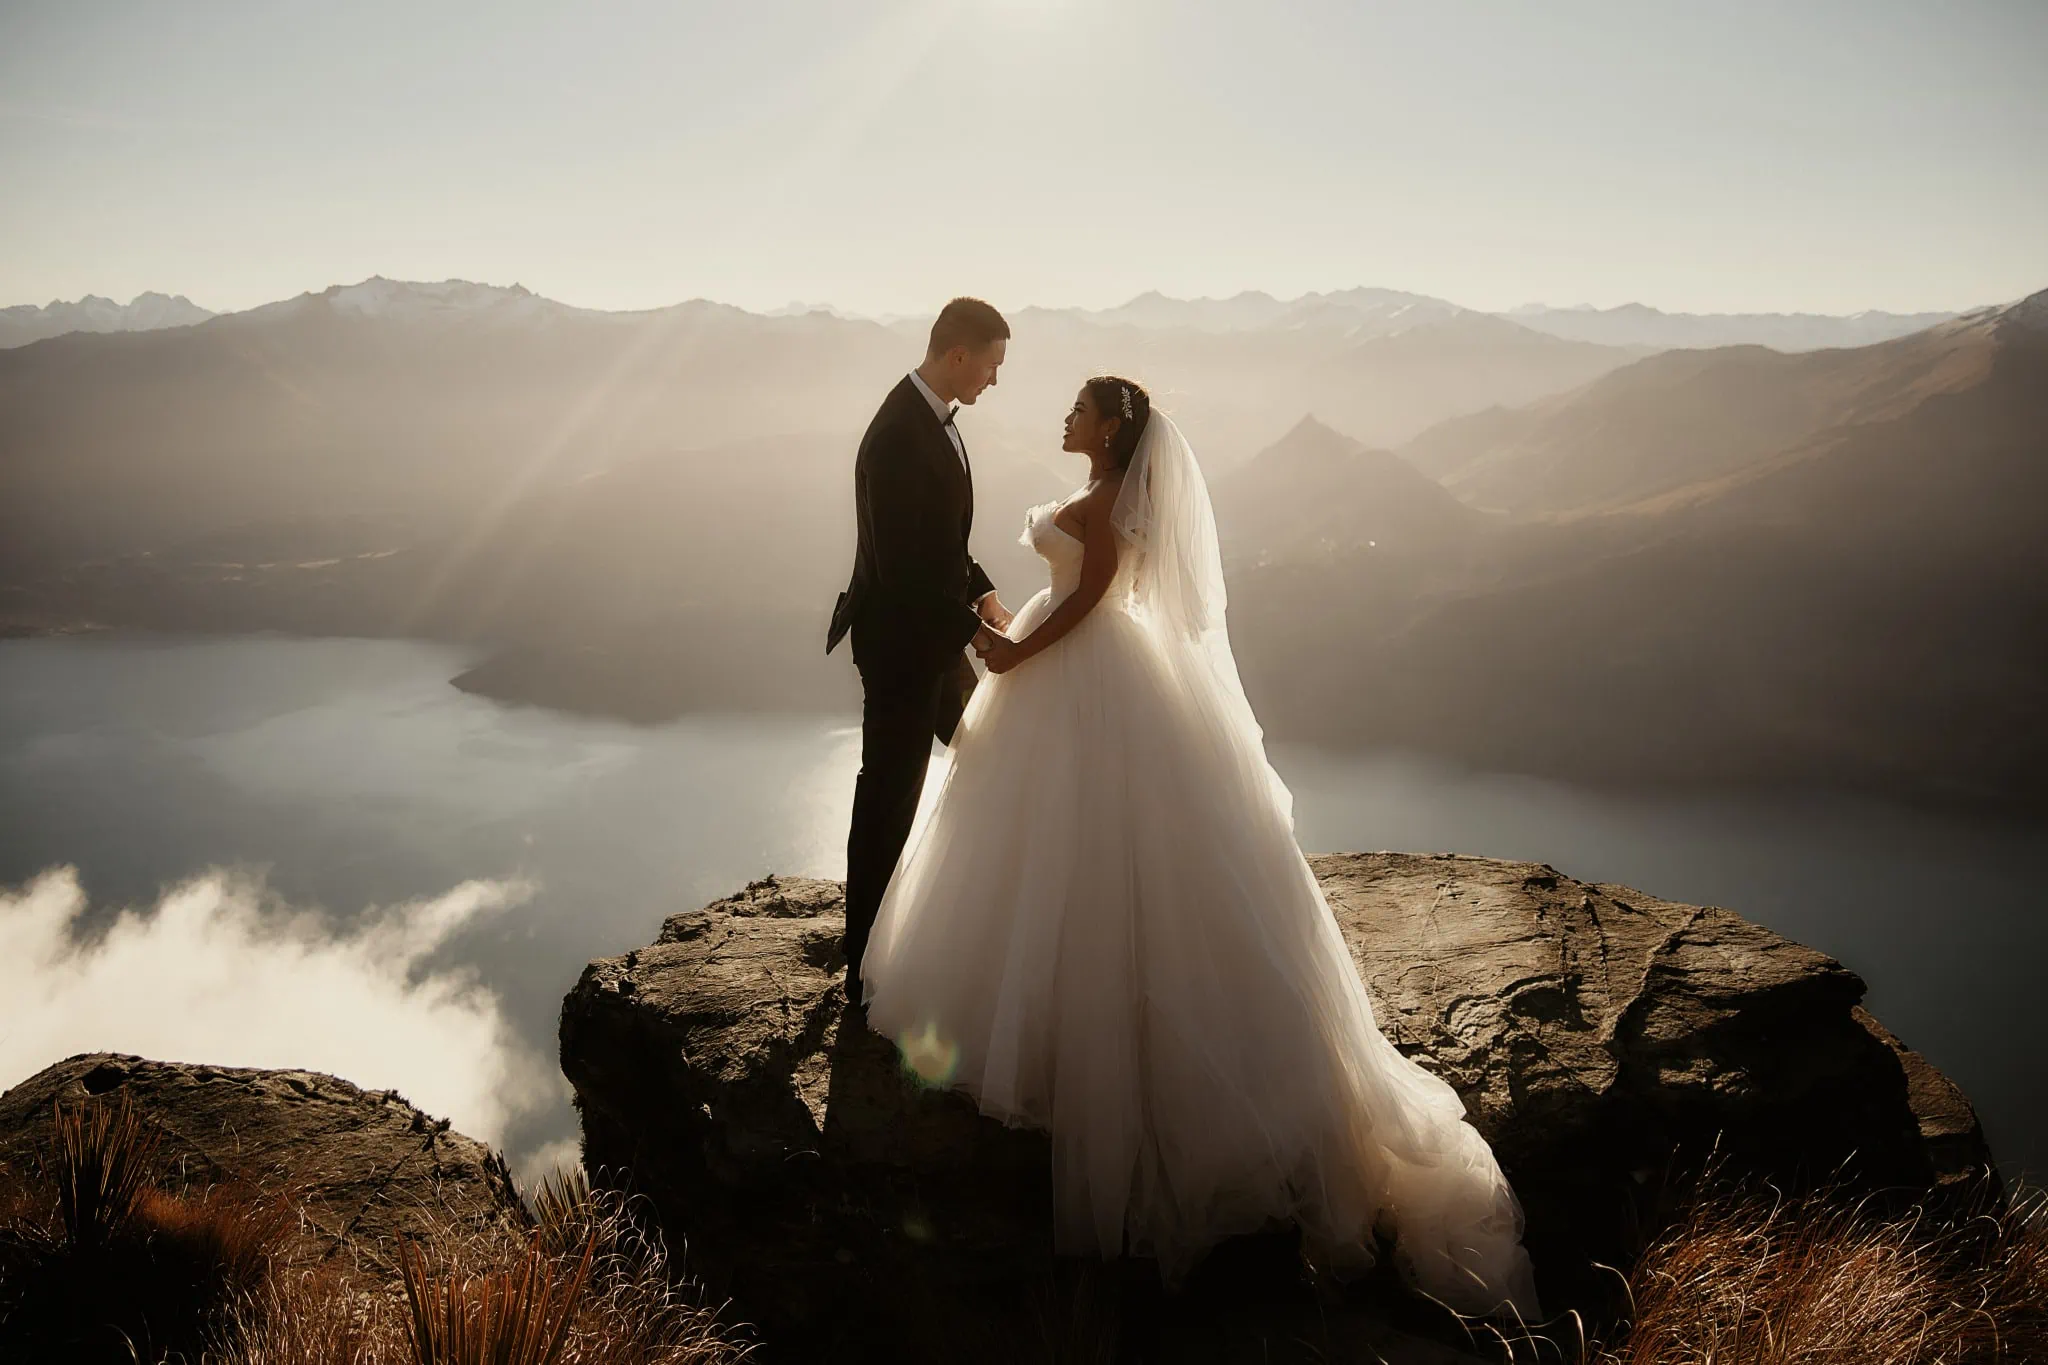 Queenstown New Zealand Elopement Wedding Photographer - Amy and Callum's Queenstown Heli Pre Wedding Shoot on top of a mountain overlooking Lake Wanaka.